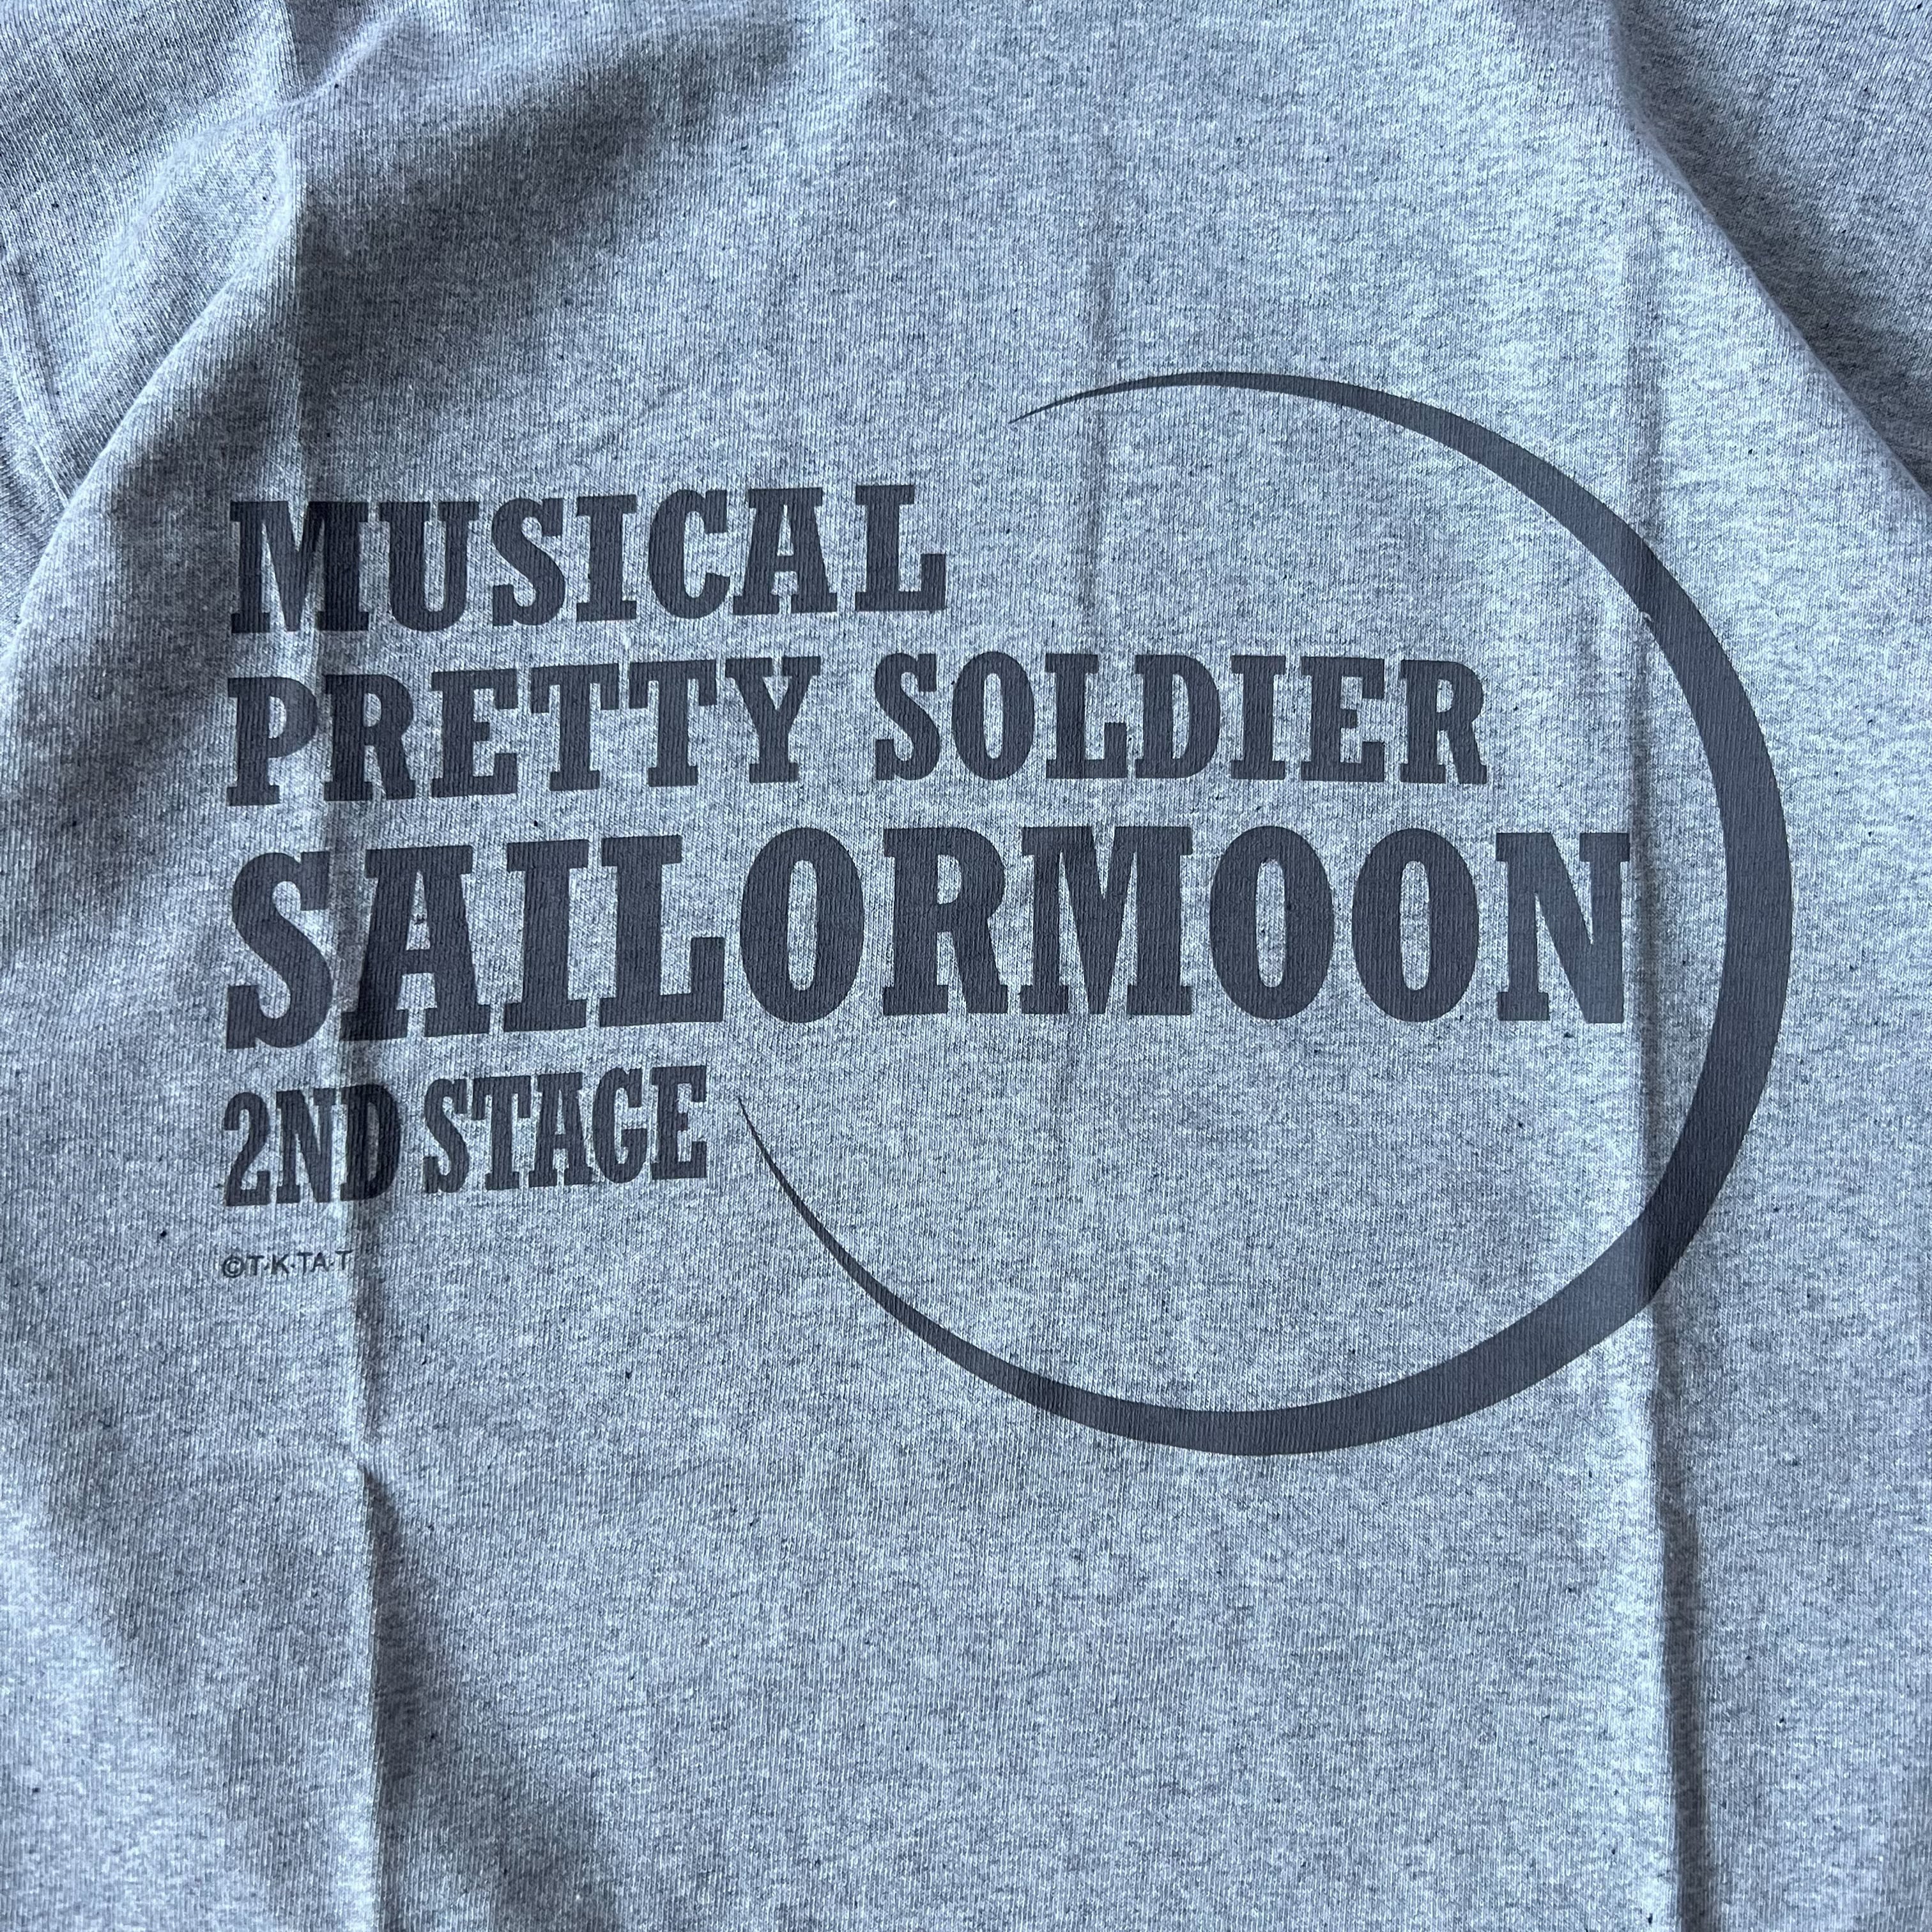 90s “ Sailor moon” musical gray Tee healthknit body made in usa 90